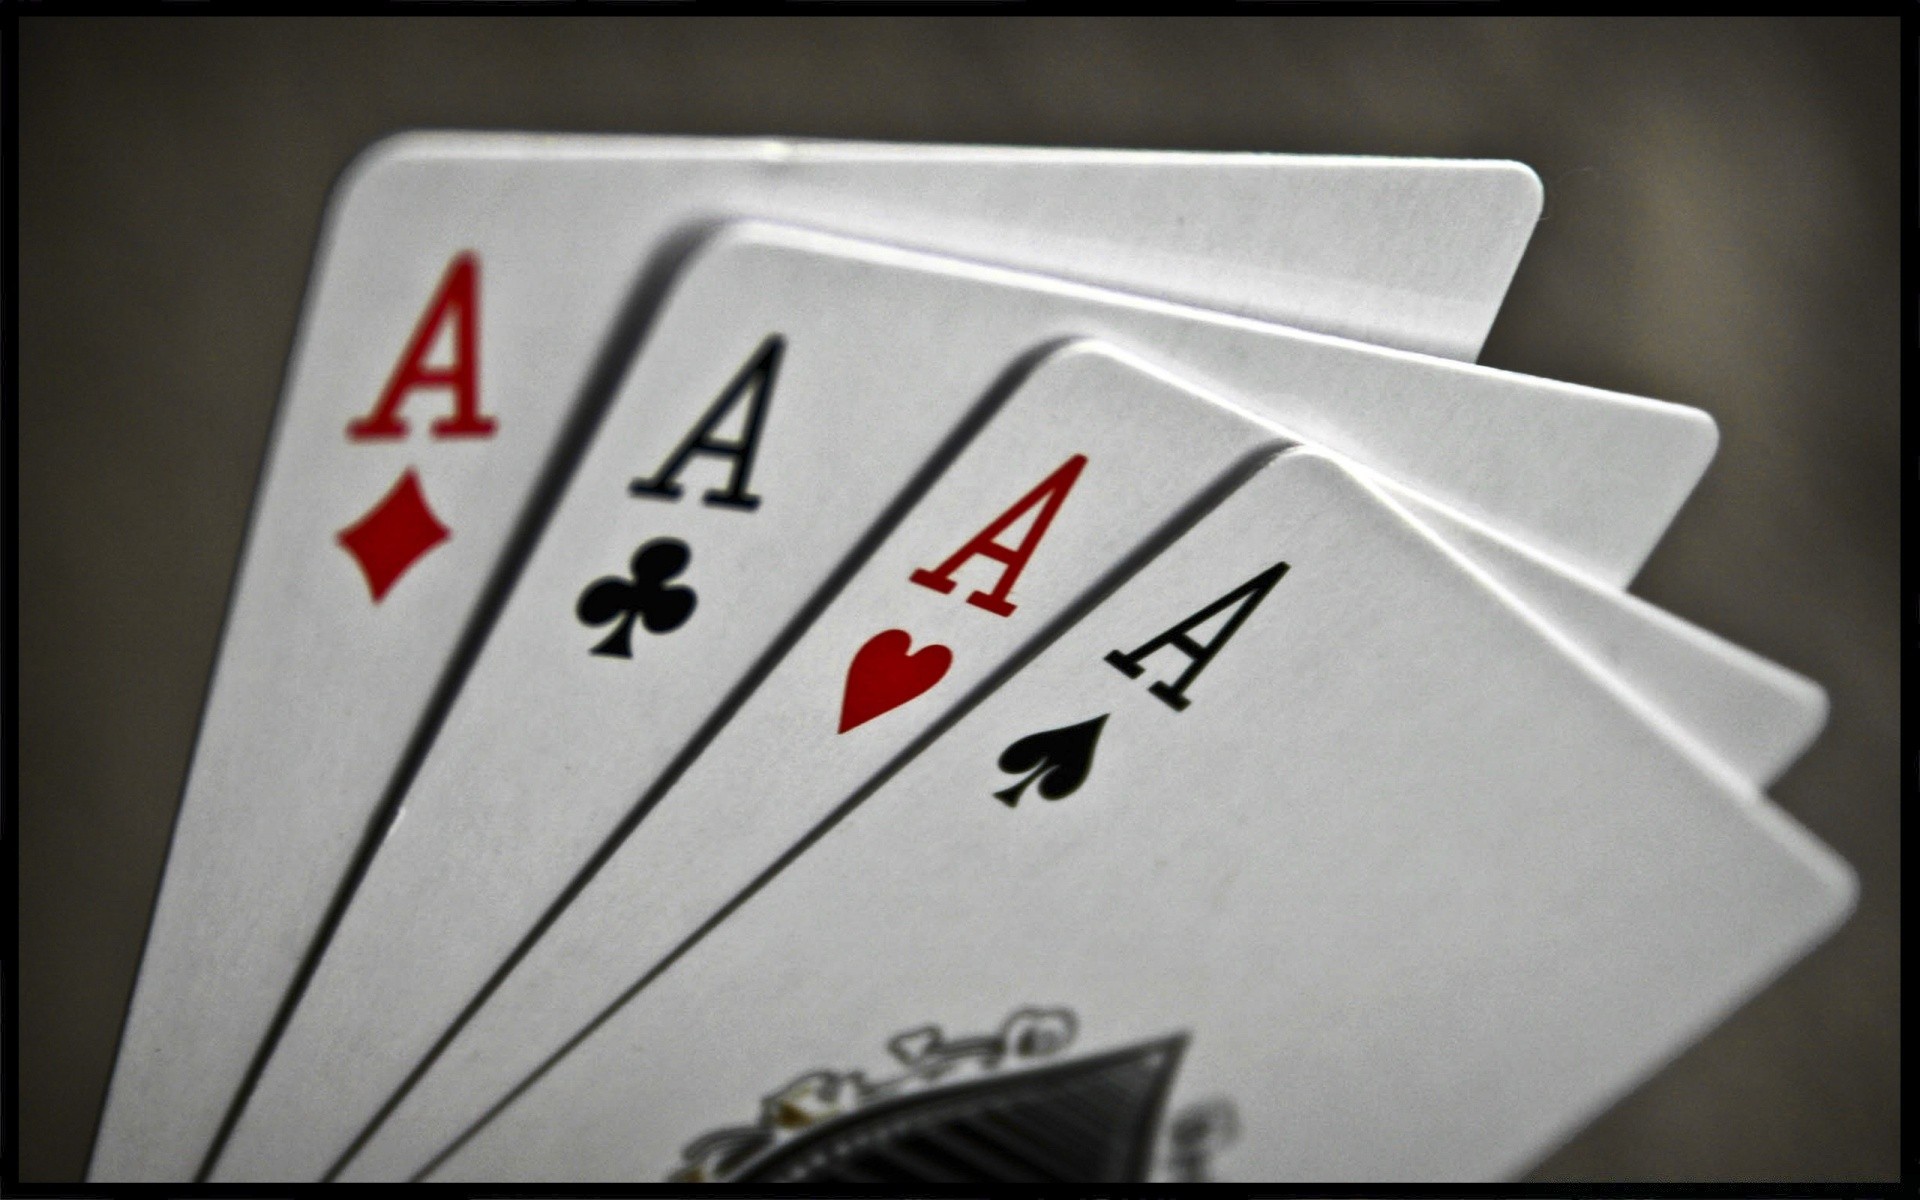 poker casino luck chance risk play leisure gambling ace win game card number lucky blackjack winner gambler business success